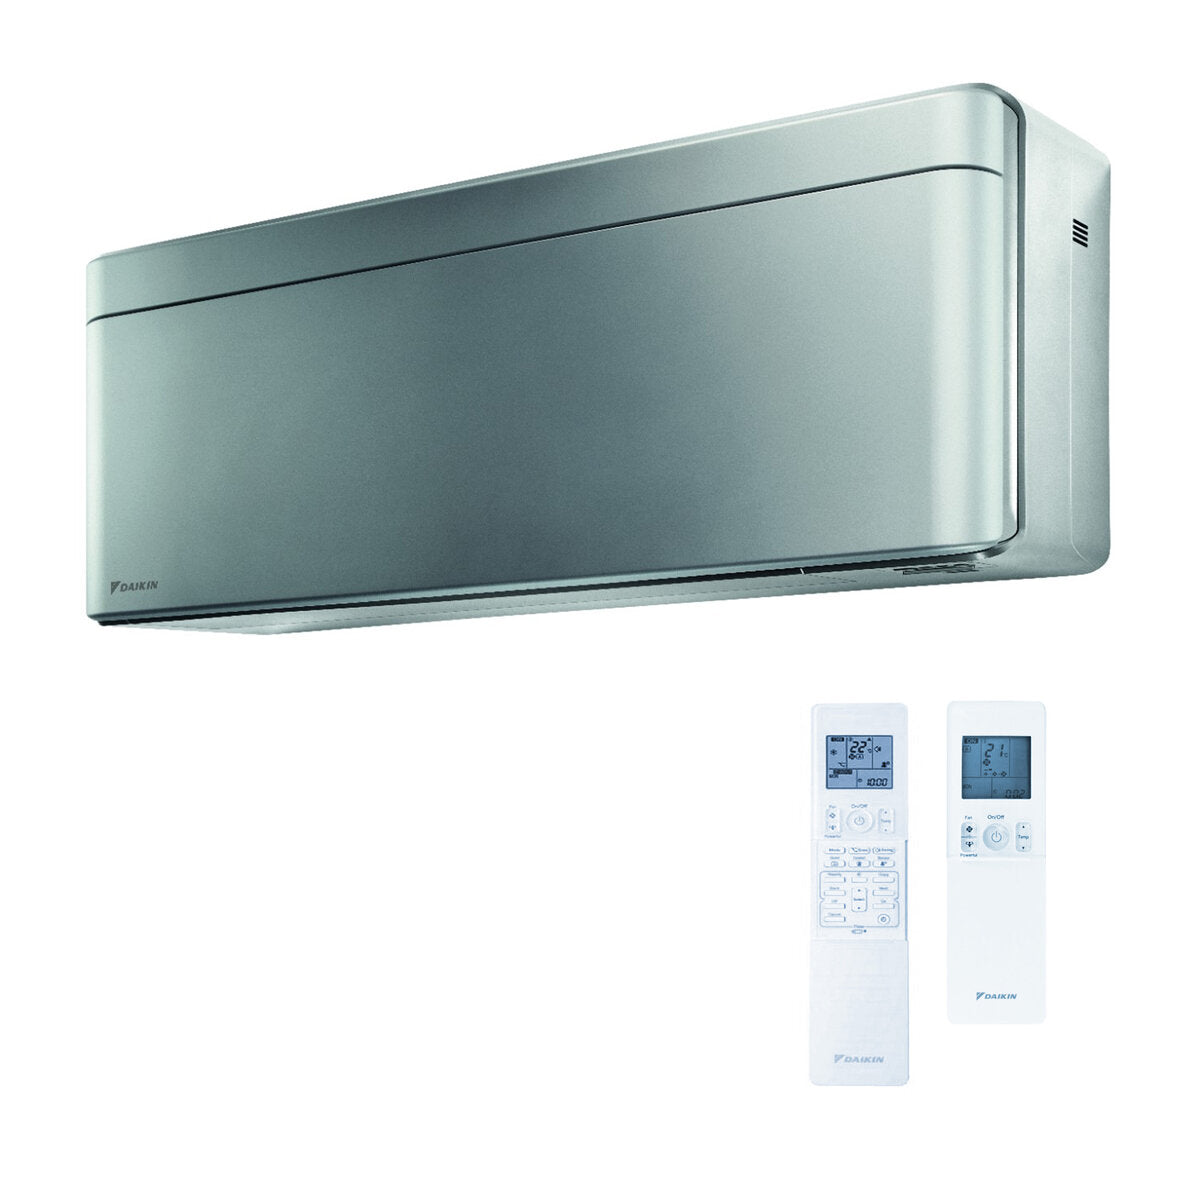 Daikin Stylish trial split 12000 + 15000 + 18000 BTU air conditioner A ++ wifi outdoor unit 8.0 kW